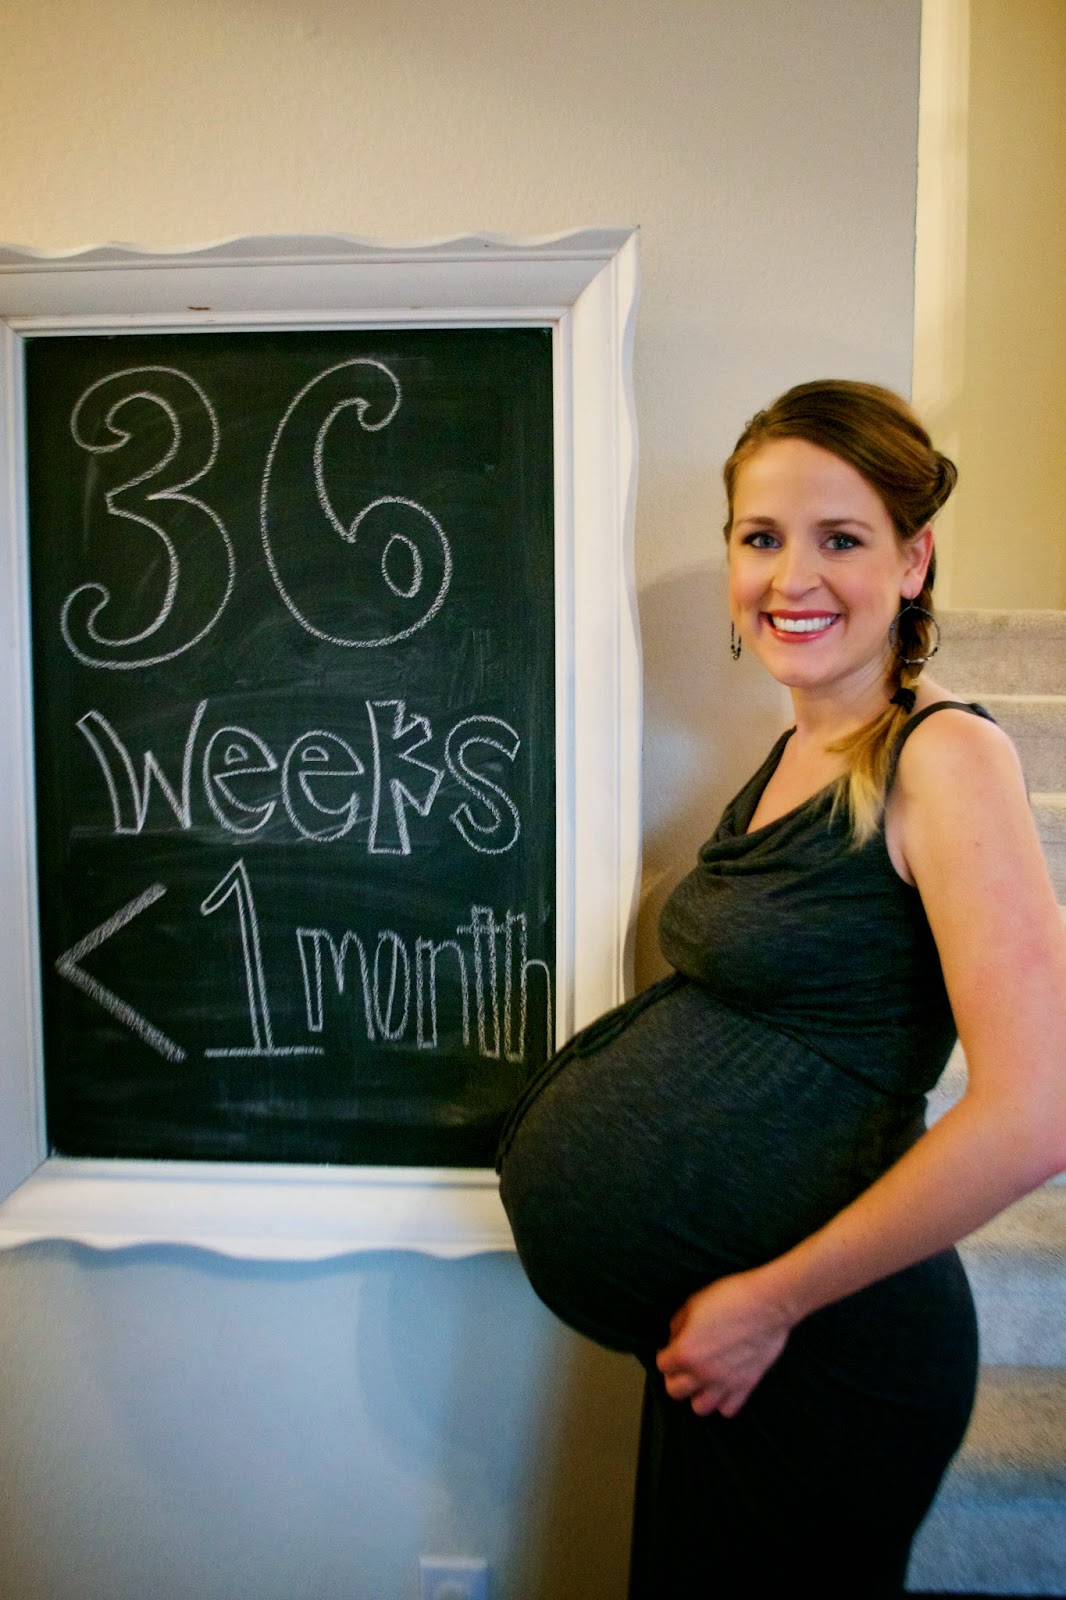 In This Joyful Life 36 Weeks With Baby Walker